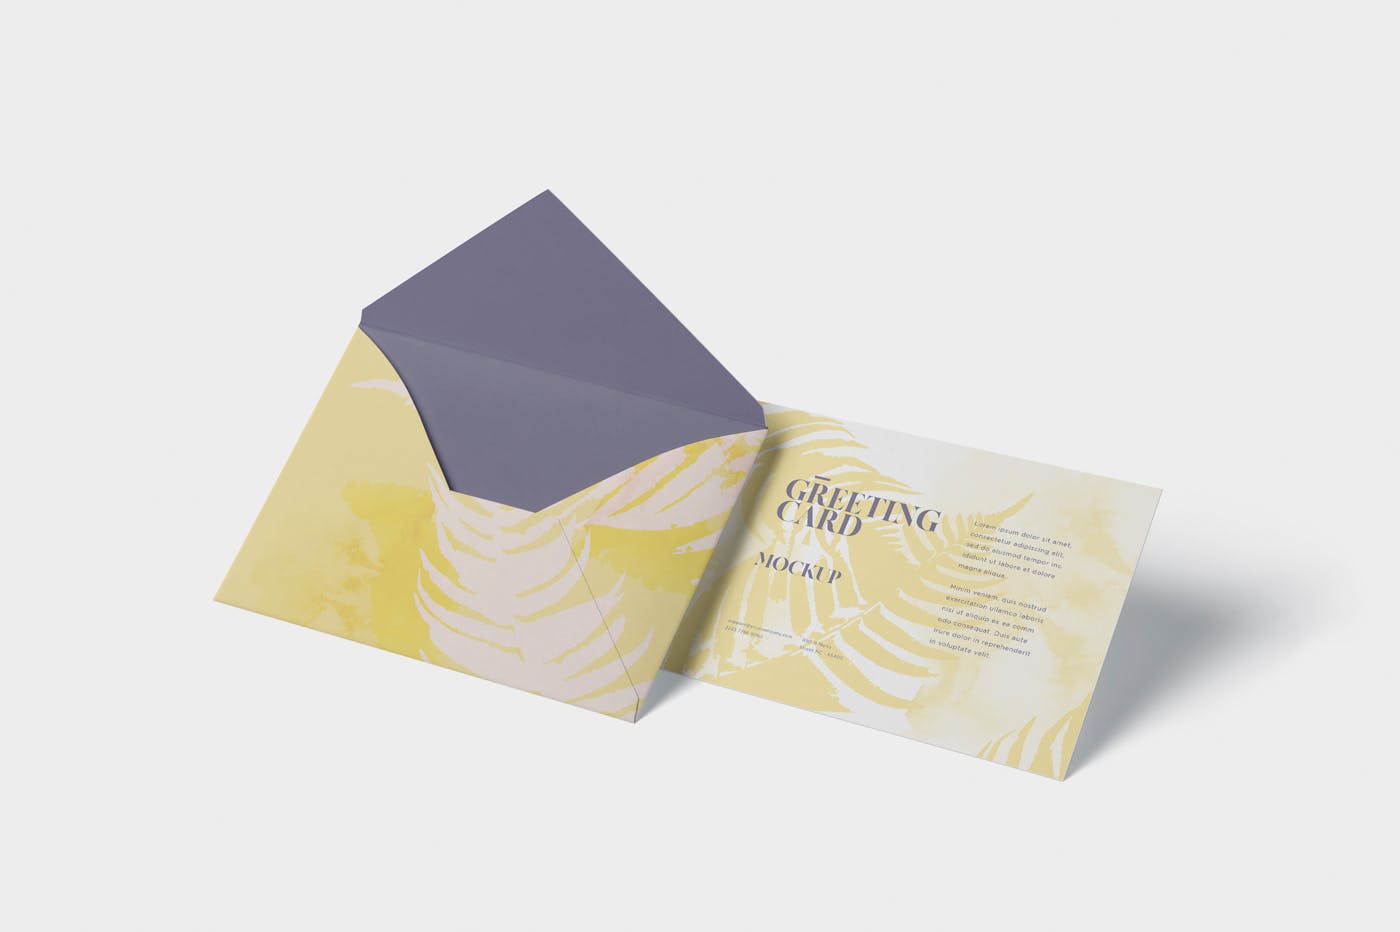 高端企业信封&贺卡设计图非凡图库精选 Greeting Card Mockup with Envelope – A6 Size插图(2)